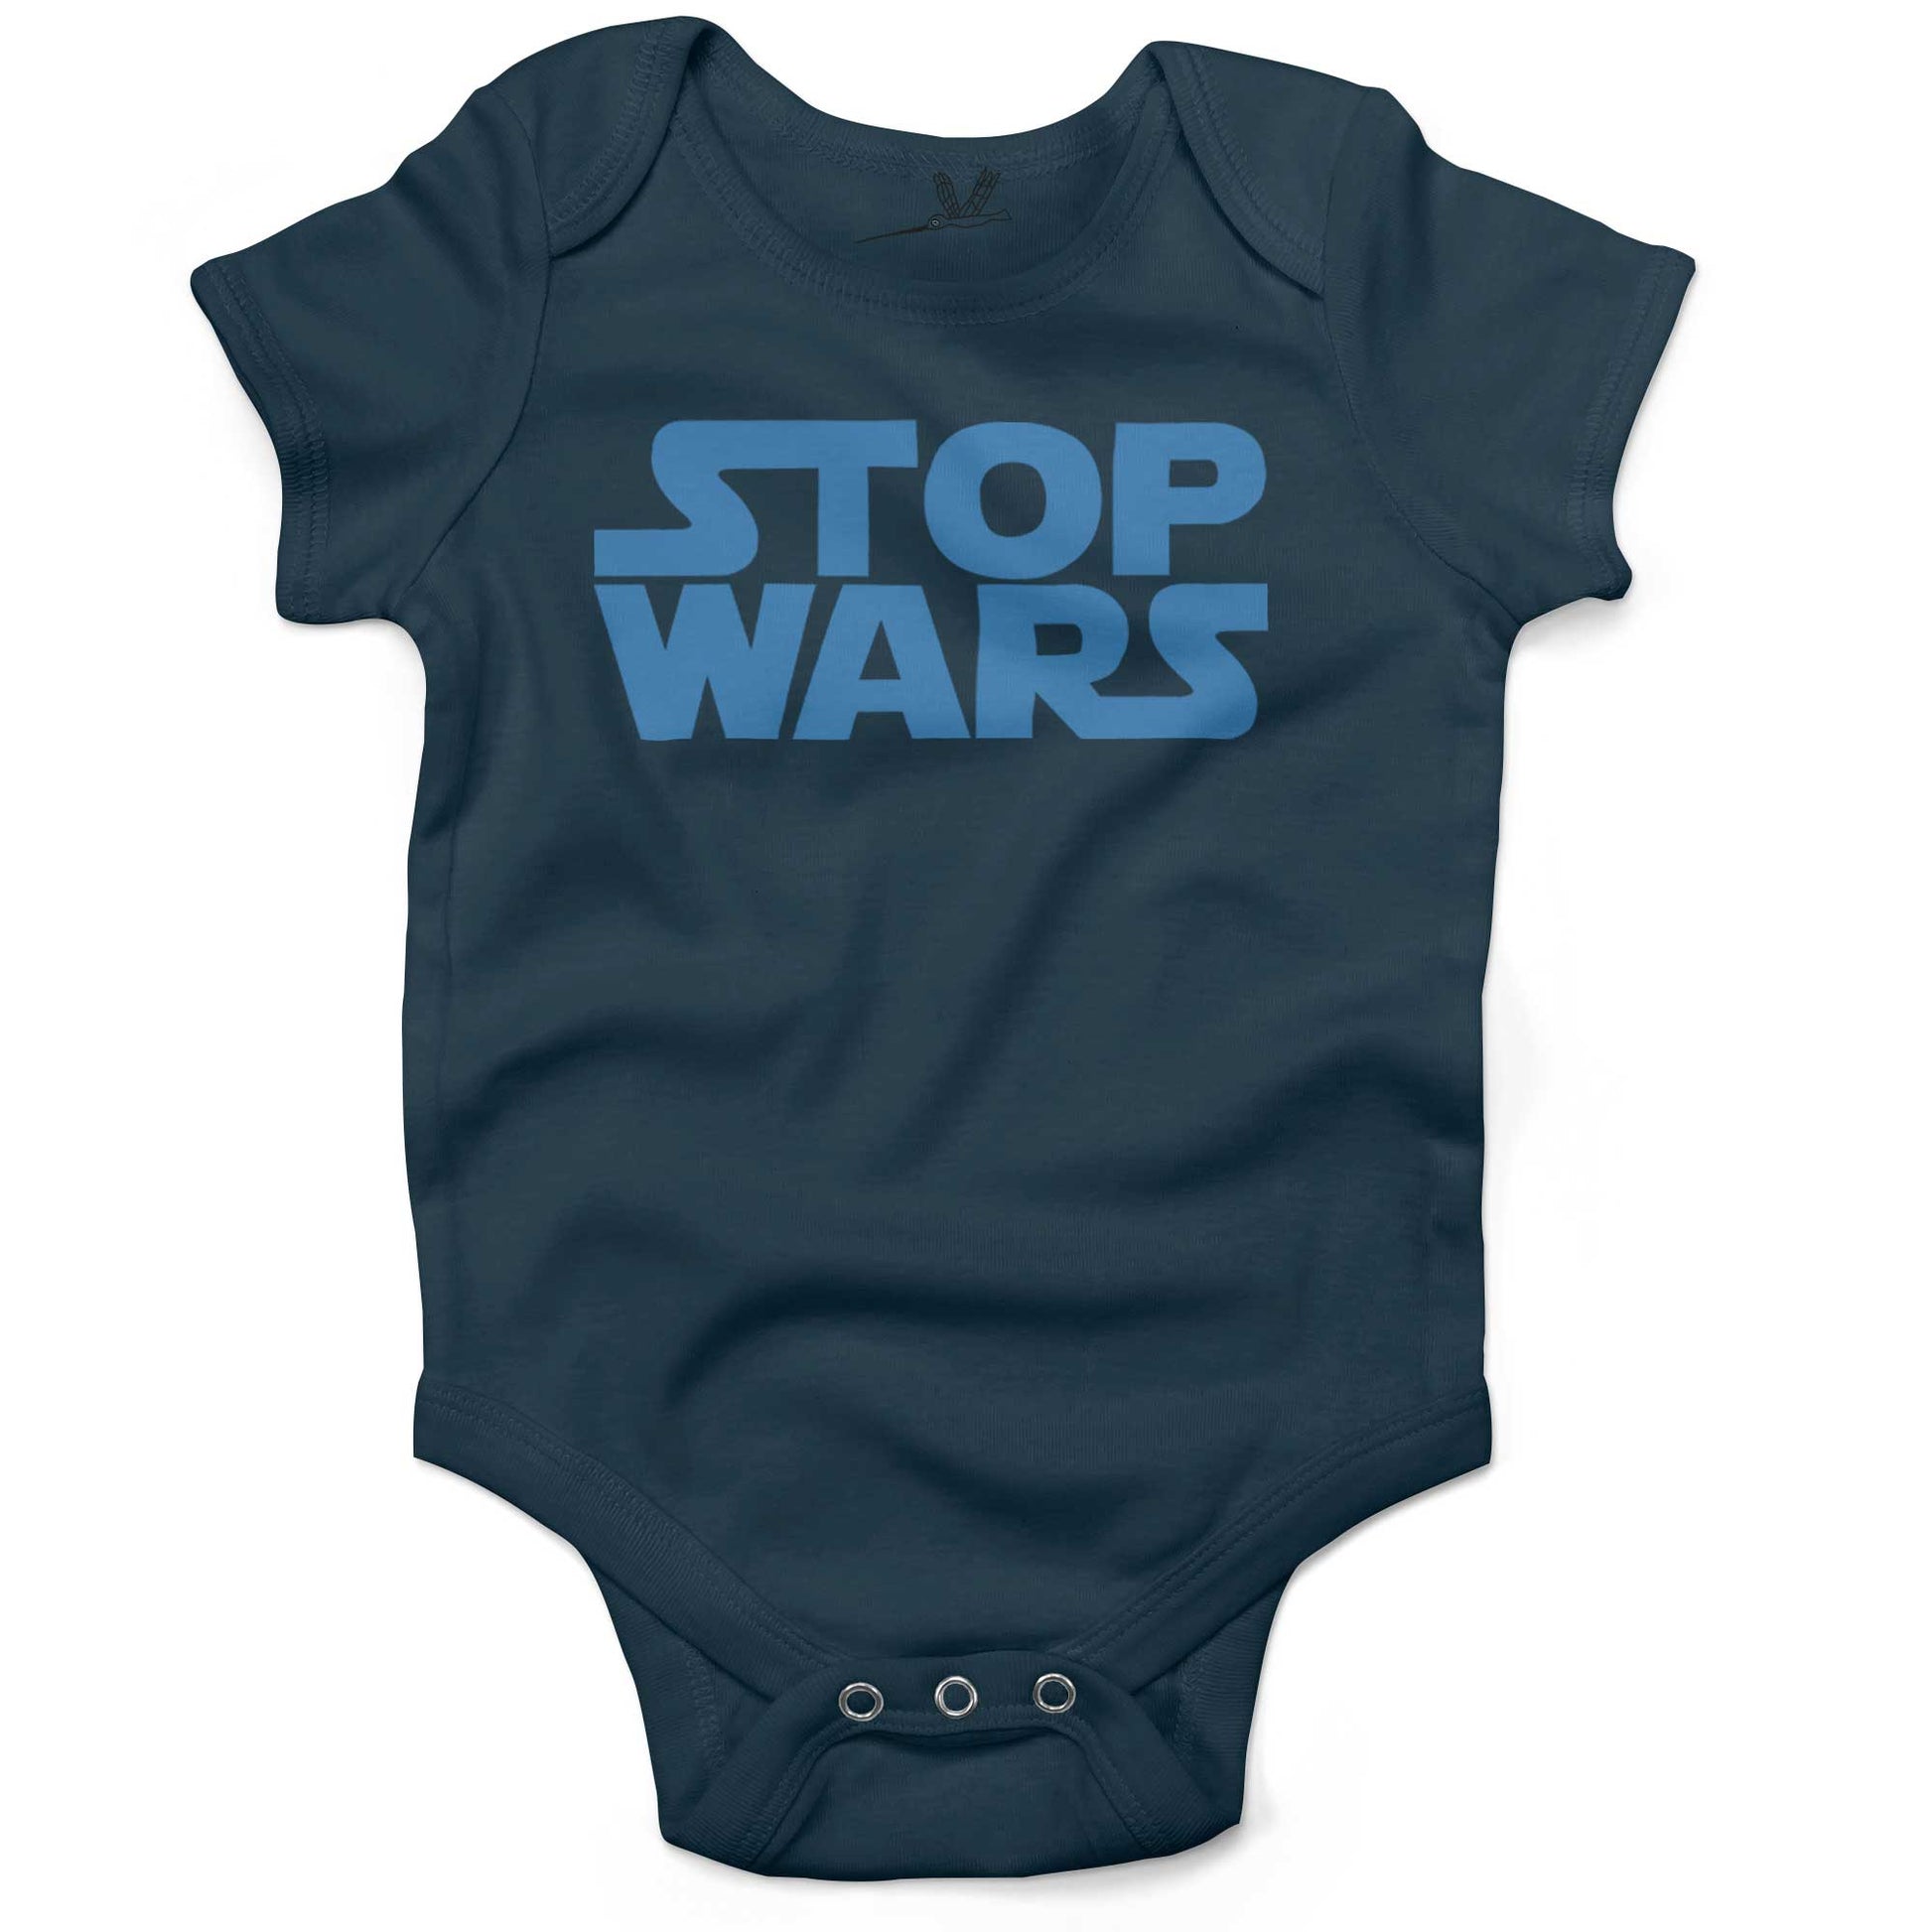 STOP WARS Infant Bodysuit or Raglan Baby Tee-Organic Pacific Blue-3-6 months